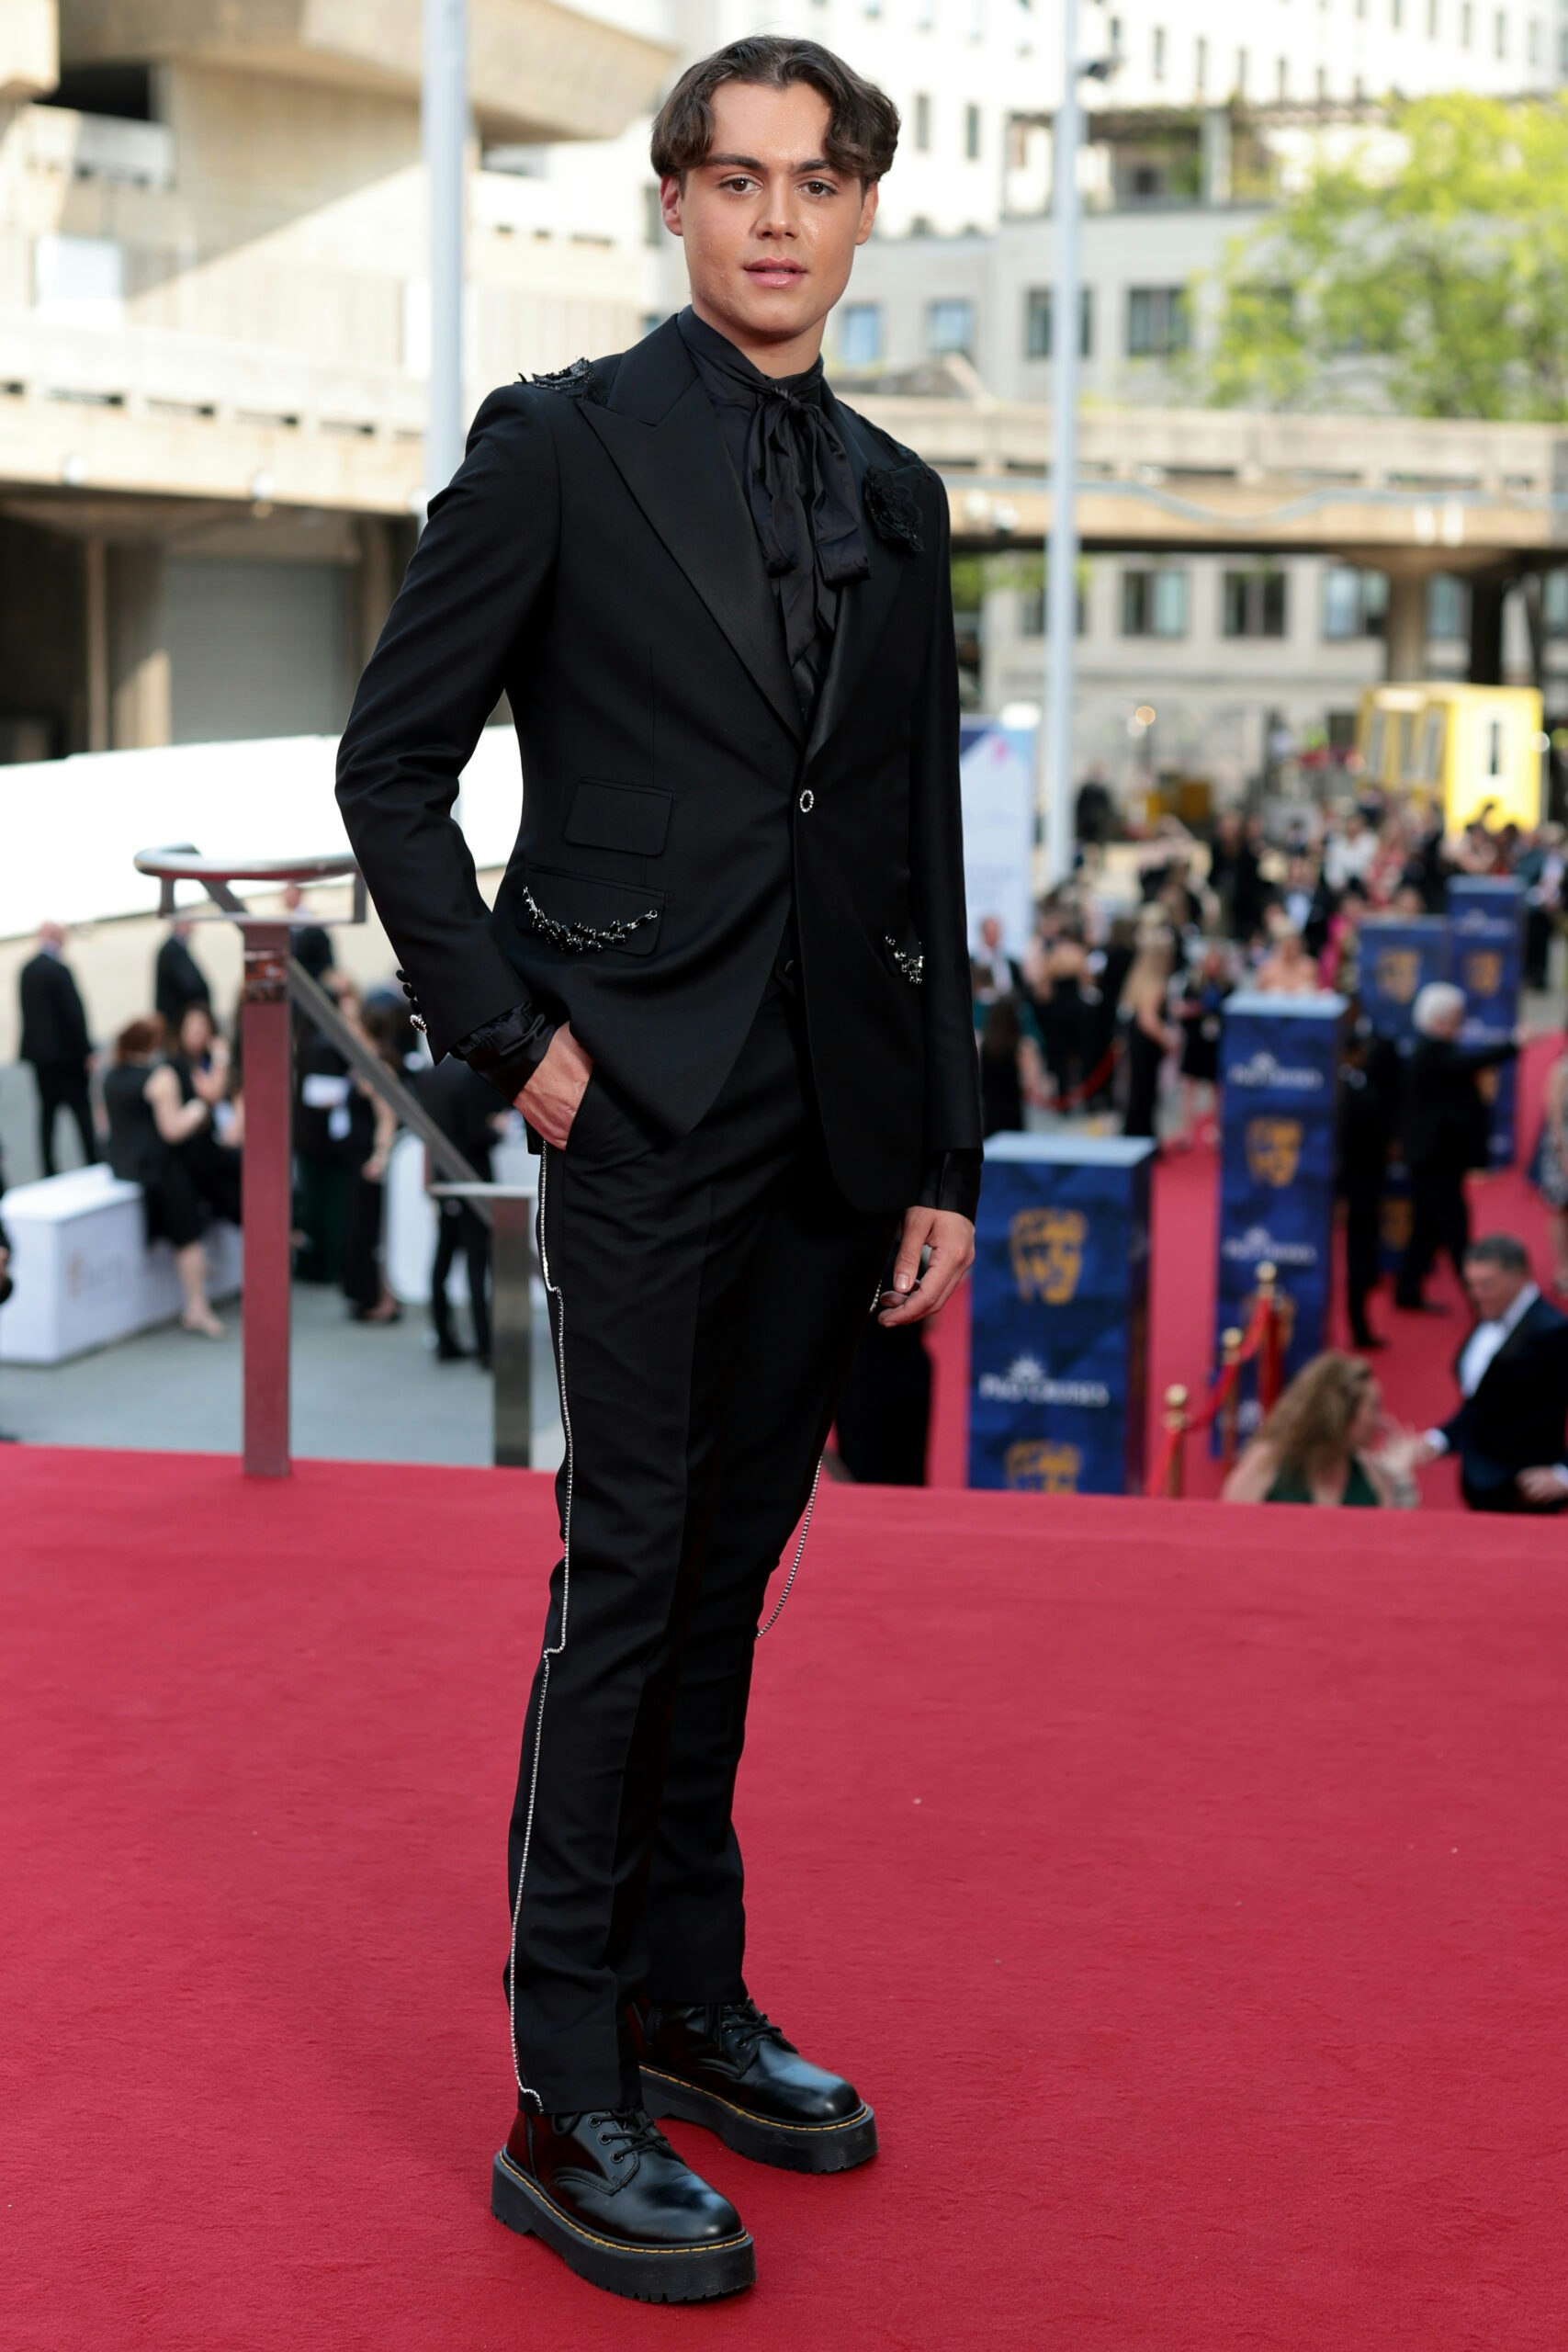 Bradley at the BAFTA Television Awards earlier this week